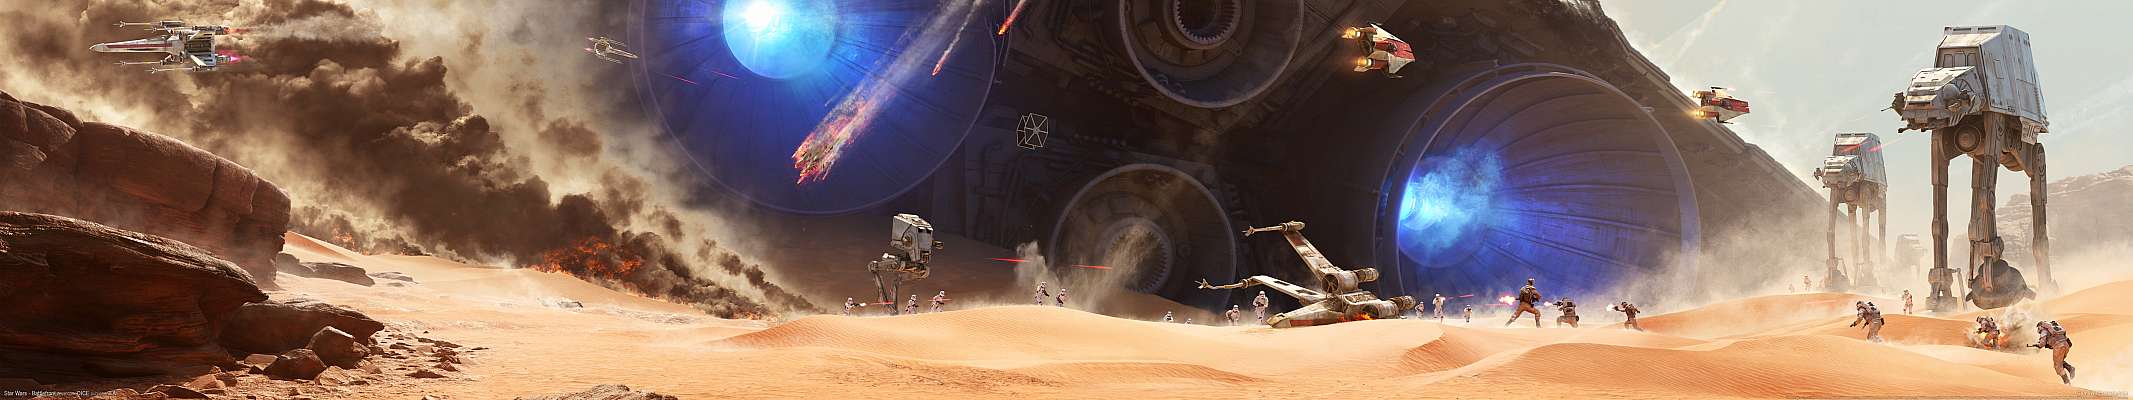 Star Wars - Battlefront triple screen fond d'cran